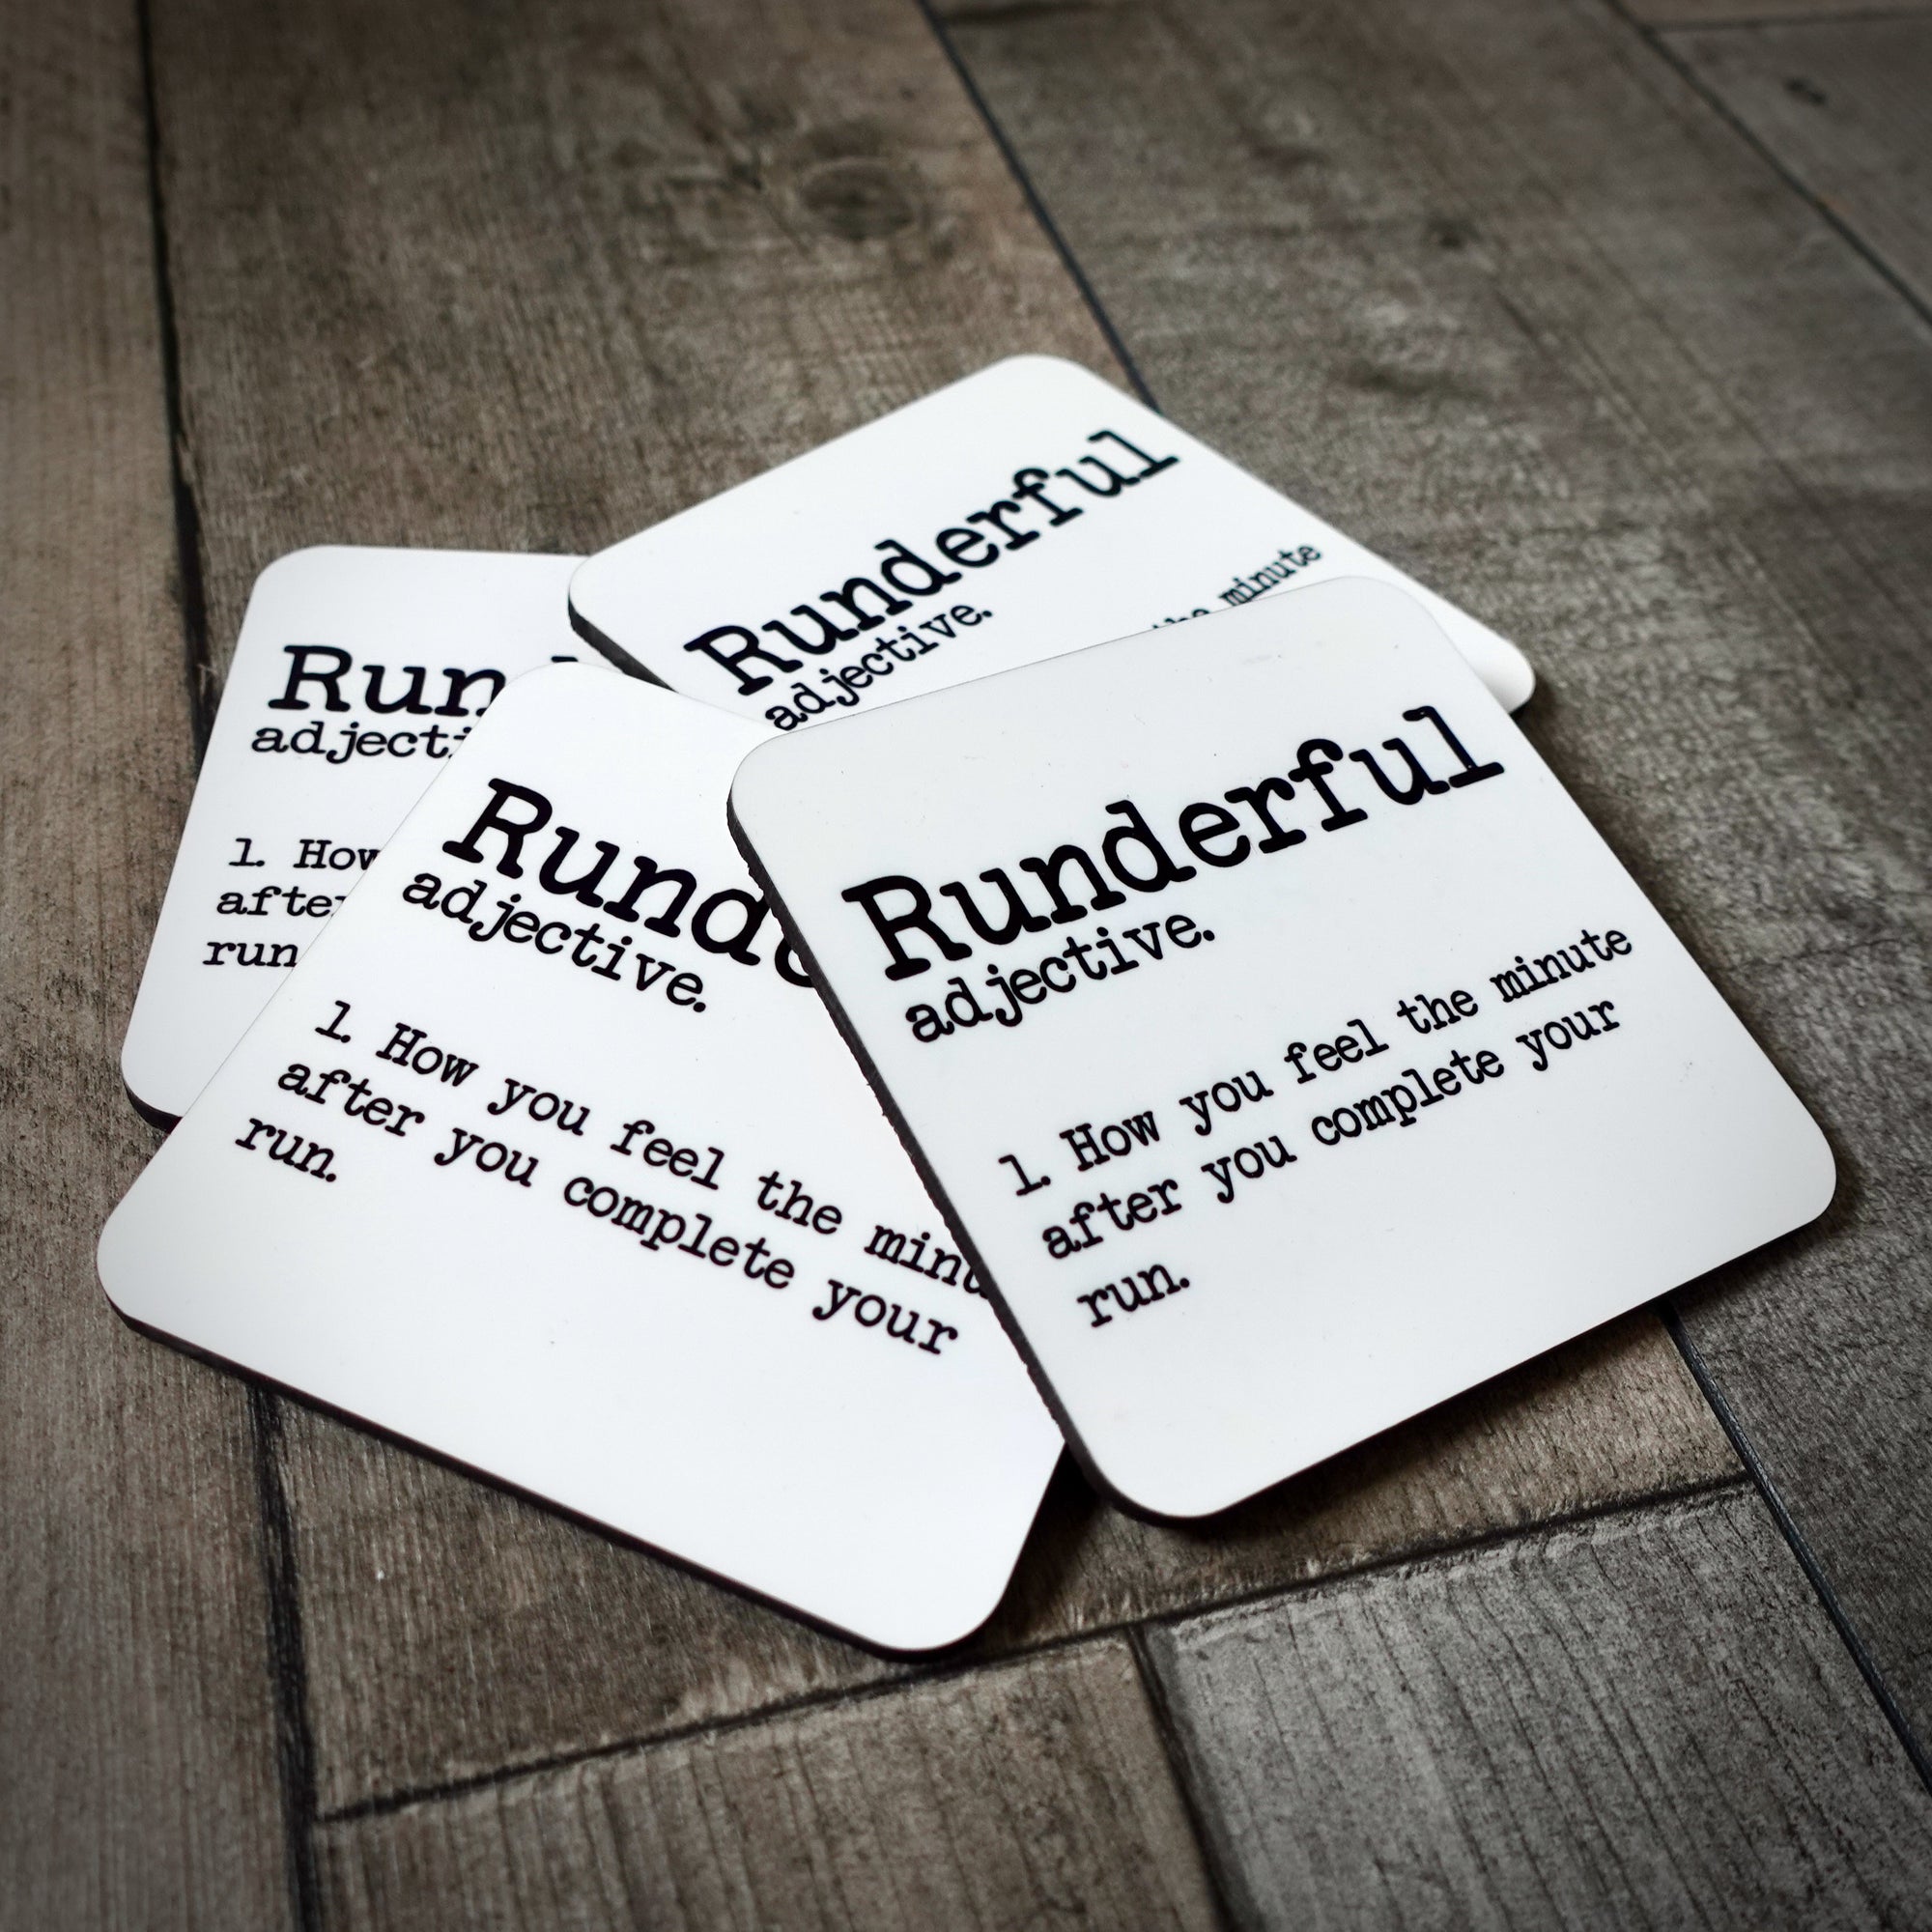 Runderful Dictionary Running Coaster